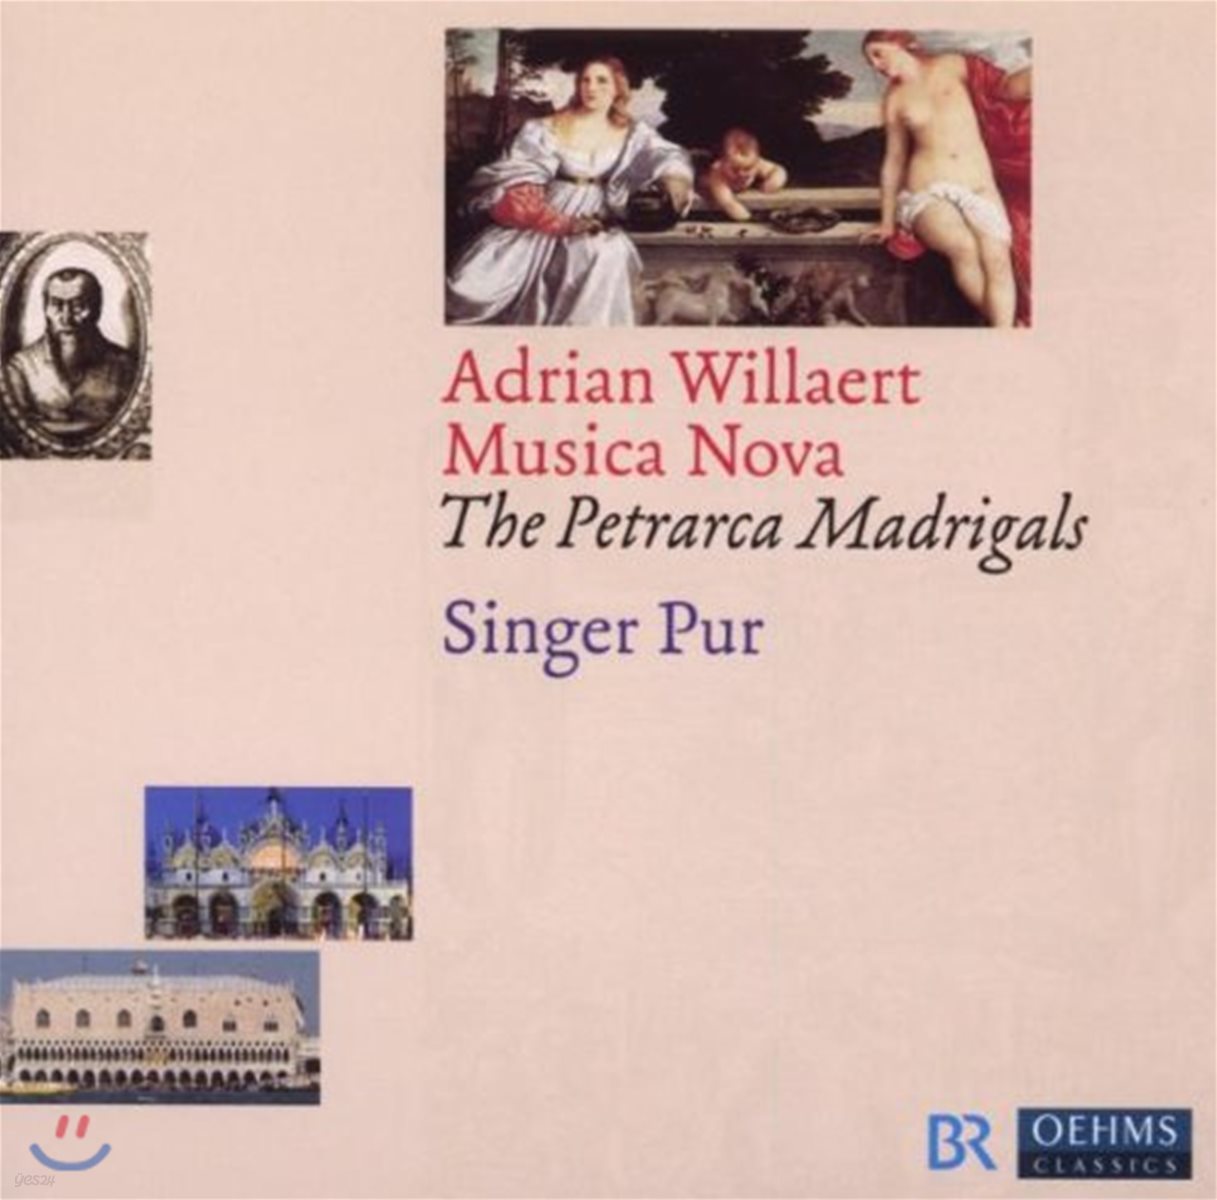 Singer Pur 무지카 노바 - 아드리안 빌레르트의 페트라르카 마드리갈 (Musica Nova - Adrian Willaert: The Petrarca Madrigals)